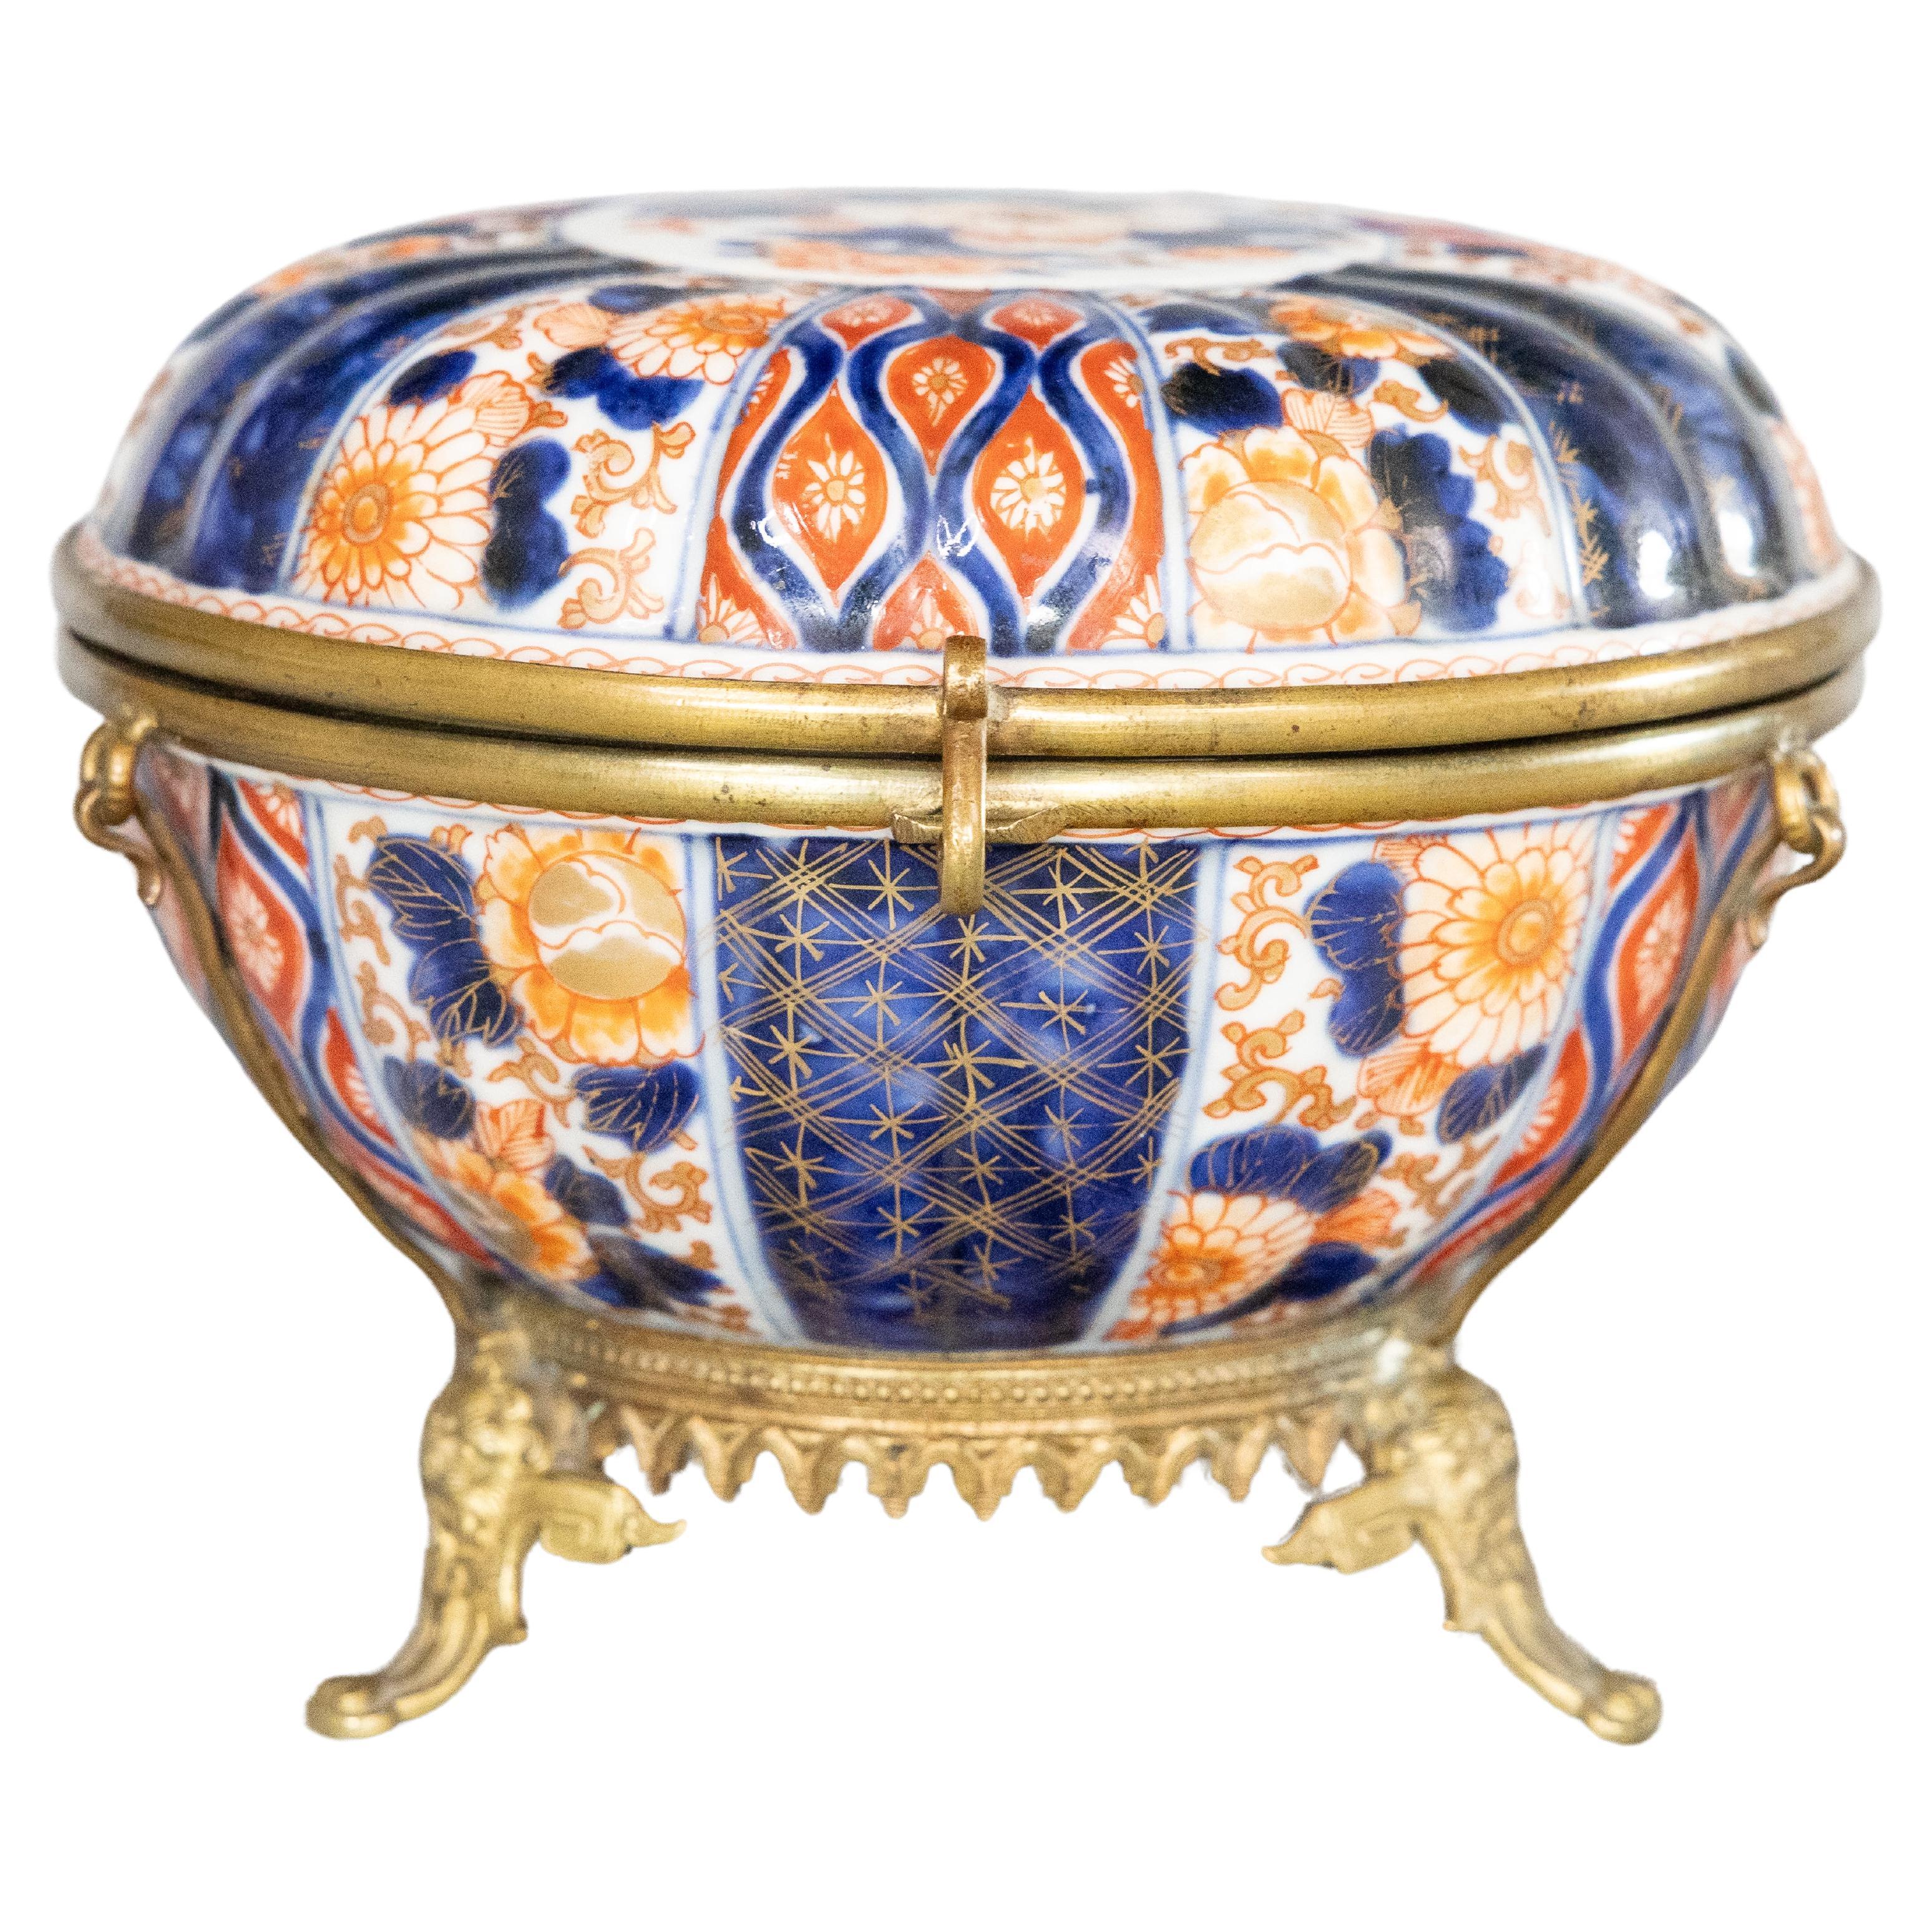 19th Century Imari Porcelain Lidded Bowl Jewelry Box For Sale